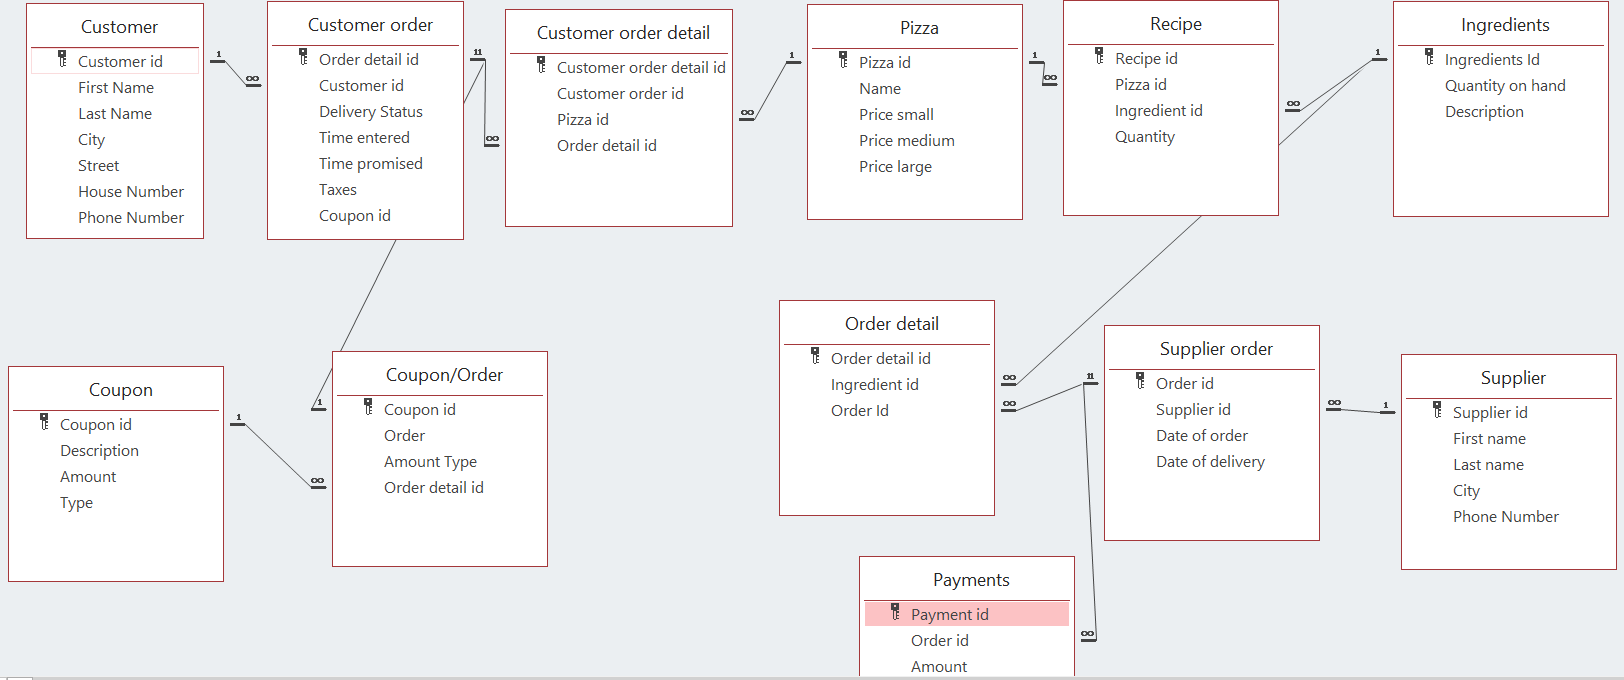 Solved: Entity Relationship Diagram For Pizza. What Else C